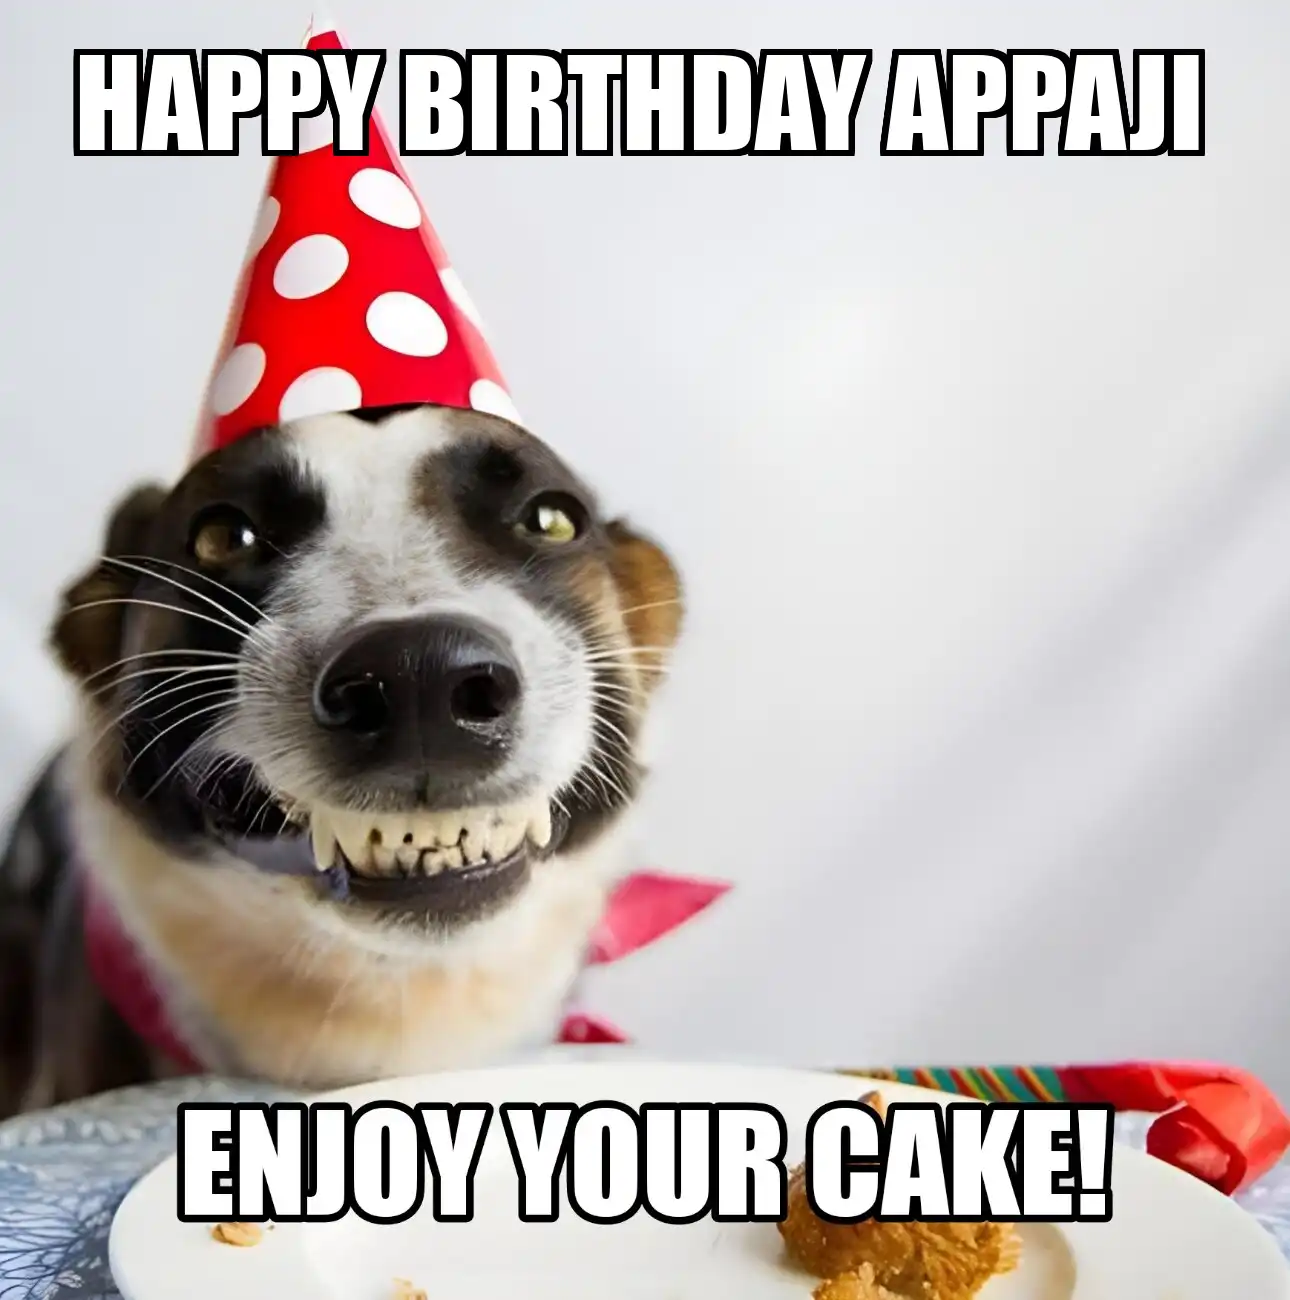 Happy Birthday Appaji Enjoy Your Cake Dog Meme